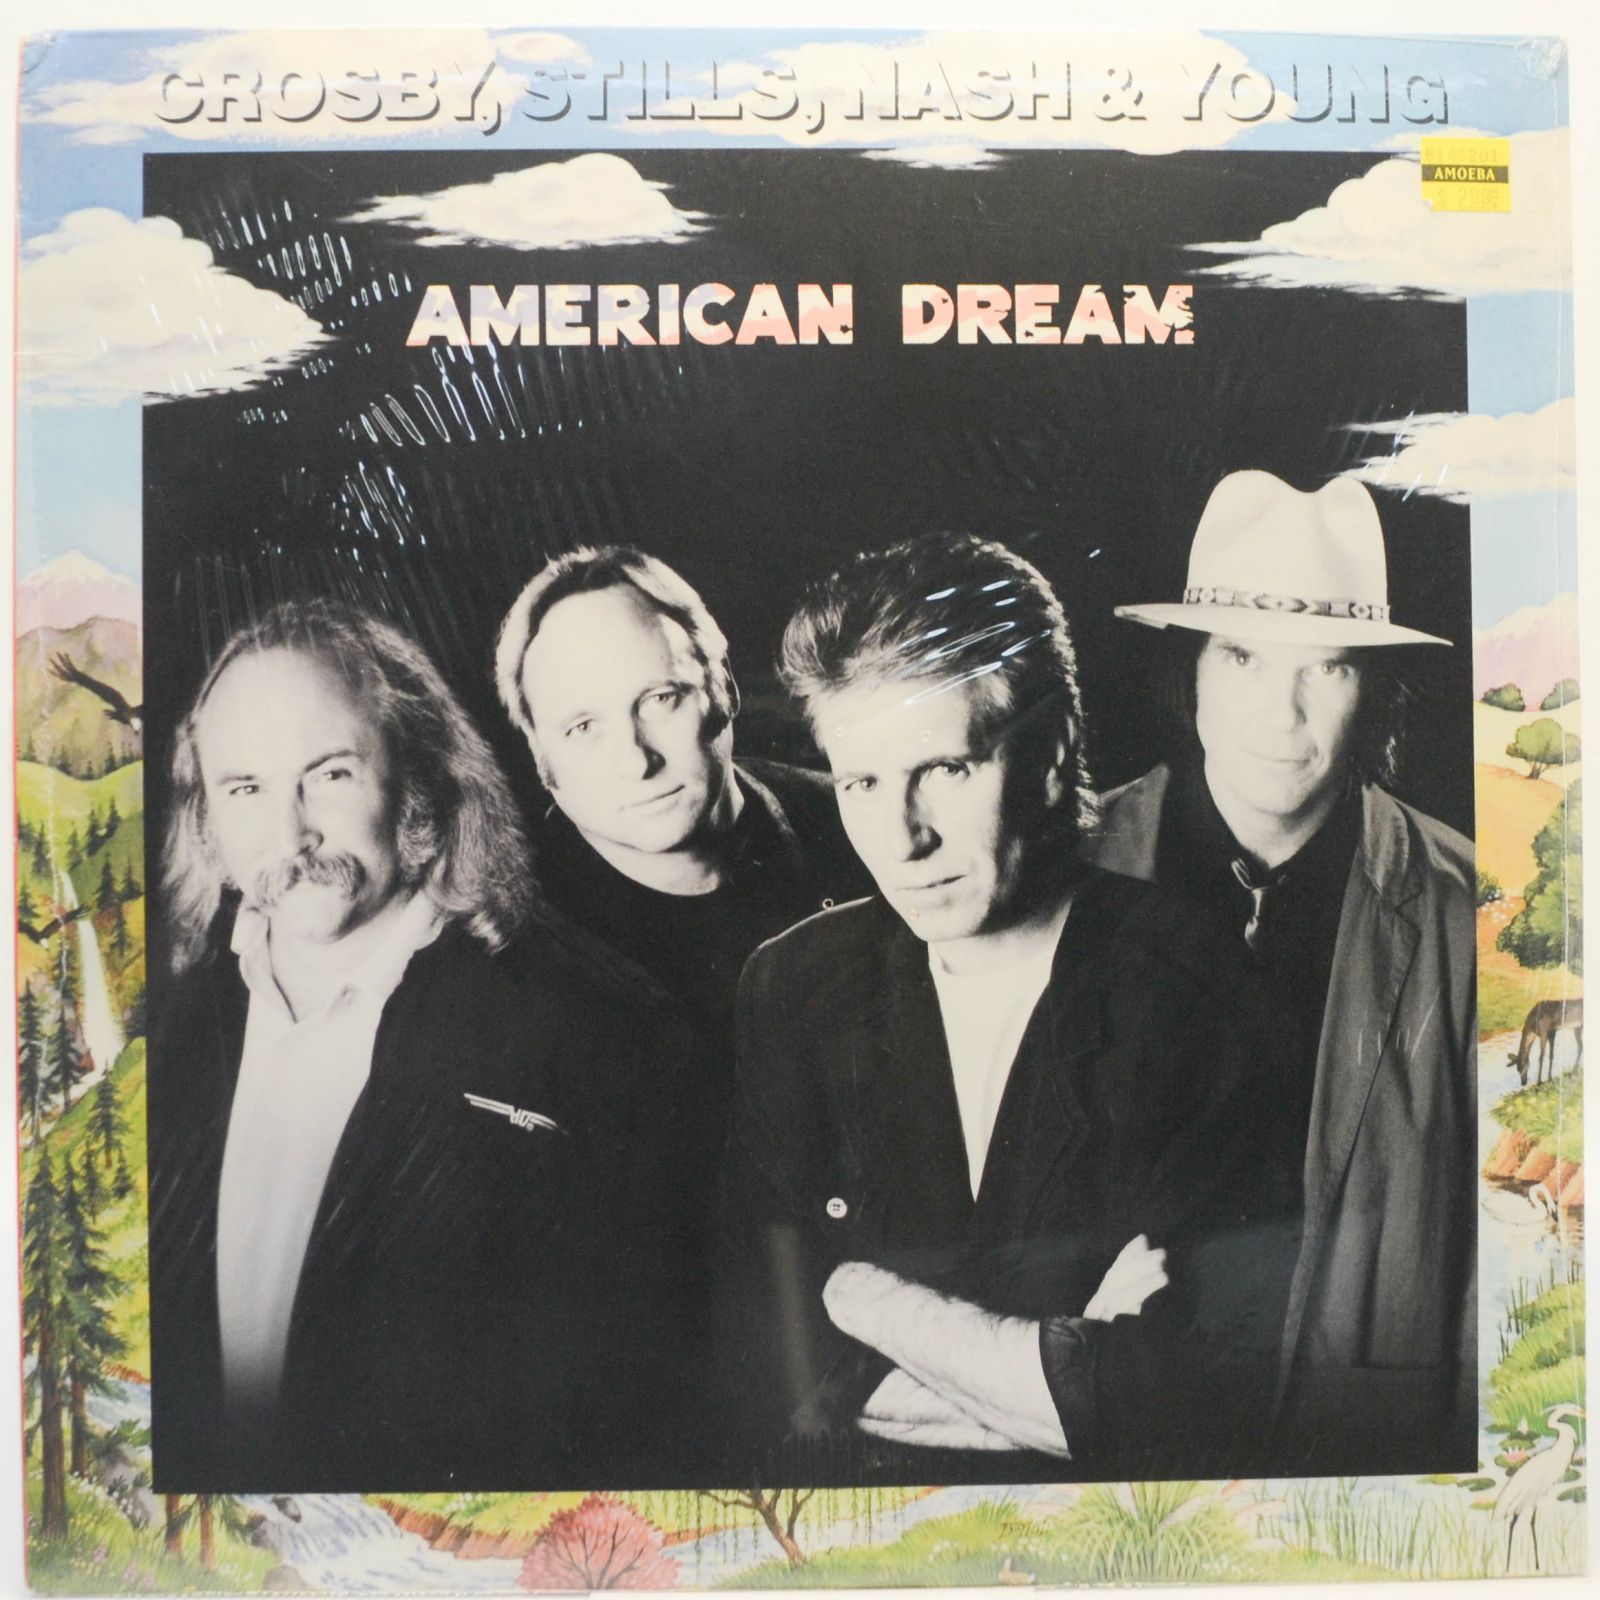 Crosby, Stills, Nash & Young — American Dream (USA), 1988